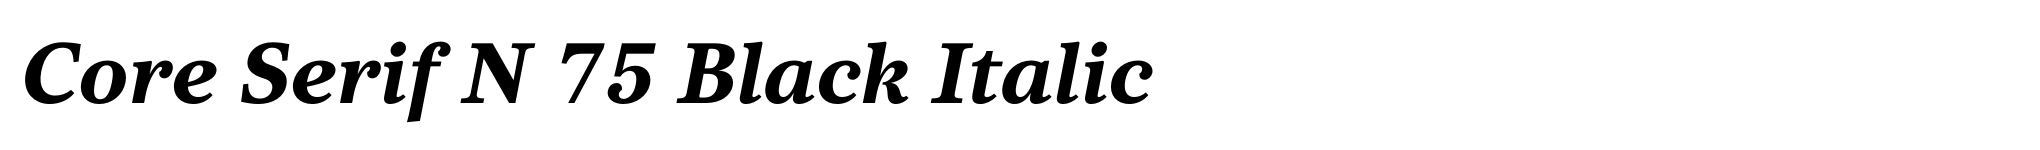 Core Serif N 75 Black Italic image